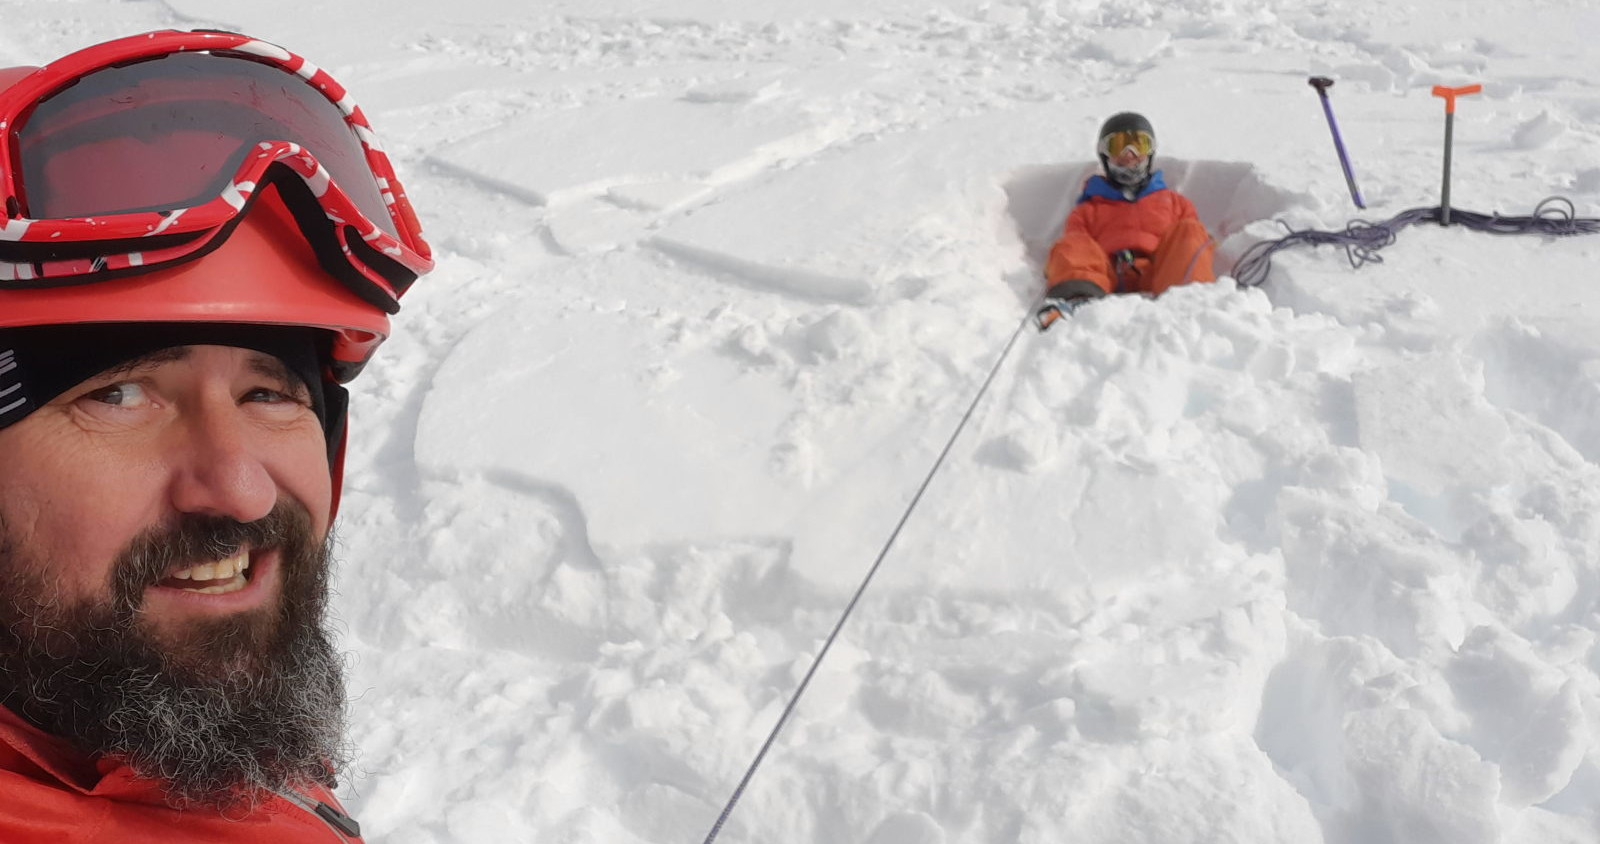 Marek Kuziel - CMC Intro to Ski Mountaneering Course - Day 2 - Anchor training and practice